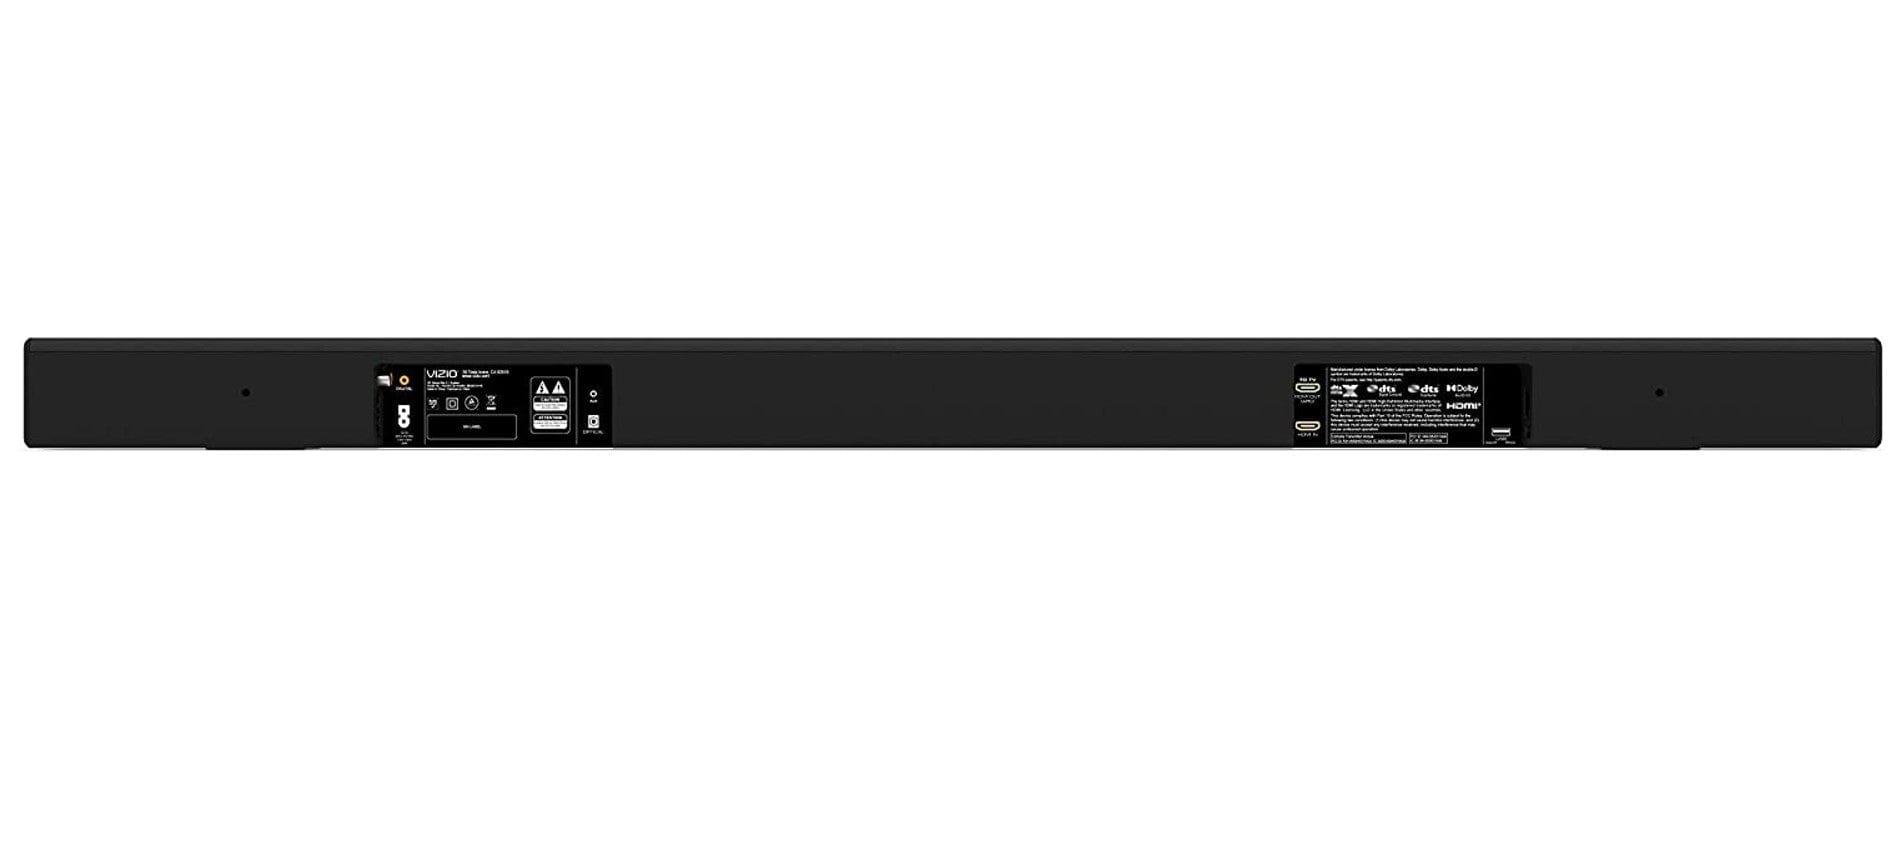 Vizio SB3651n-H46B-RB 36" 5.1 Sound Bar System - Certified Refurbished